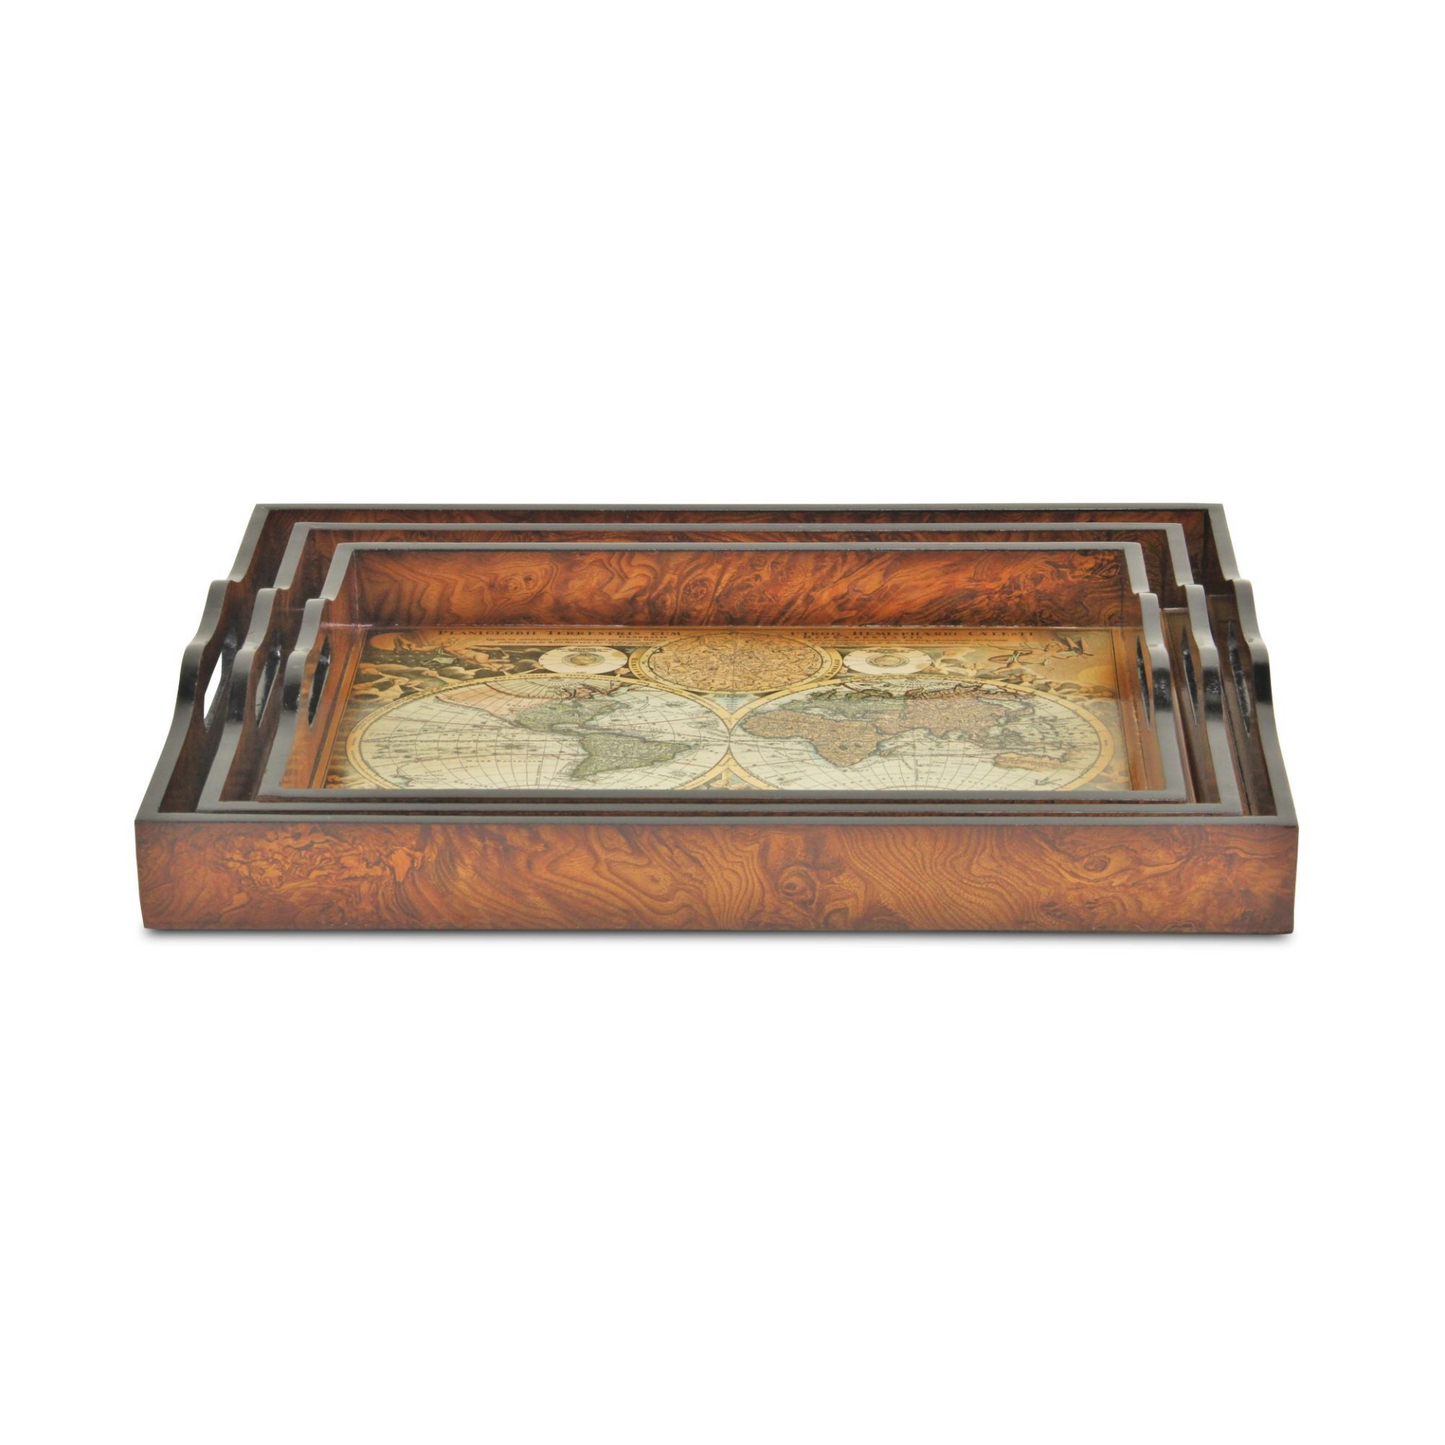 Set of Three 19" Brown Burl Wood Vintage Map Design Handmade Trays with Handles